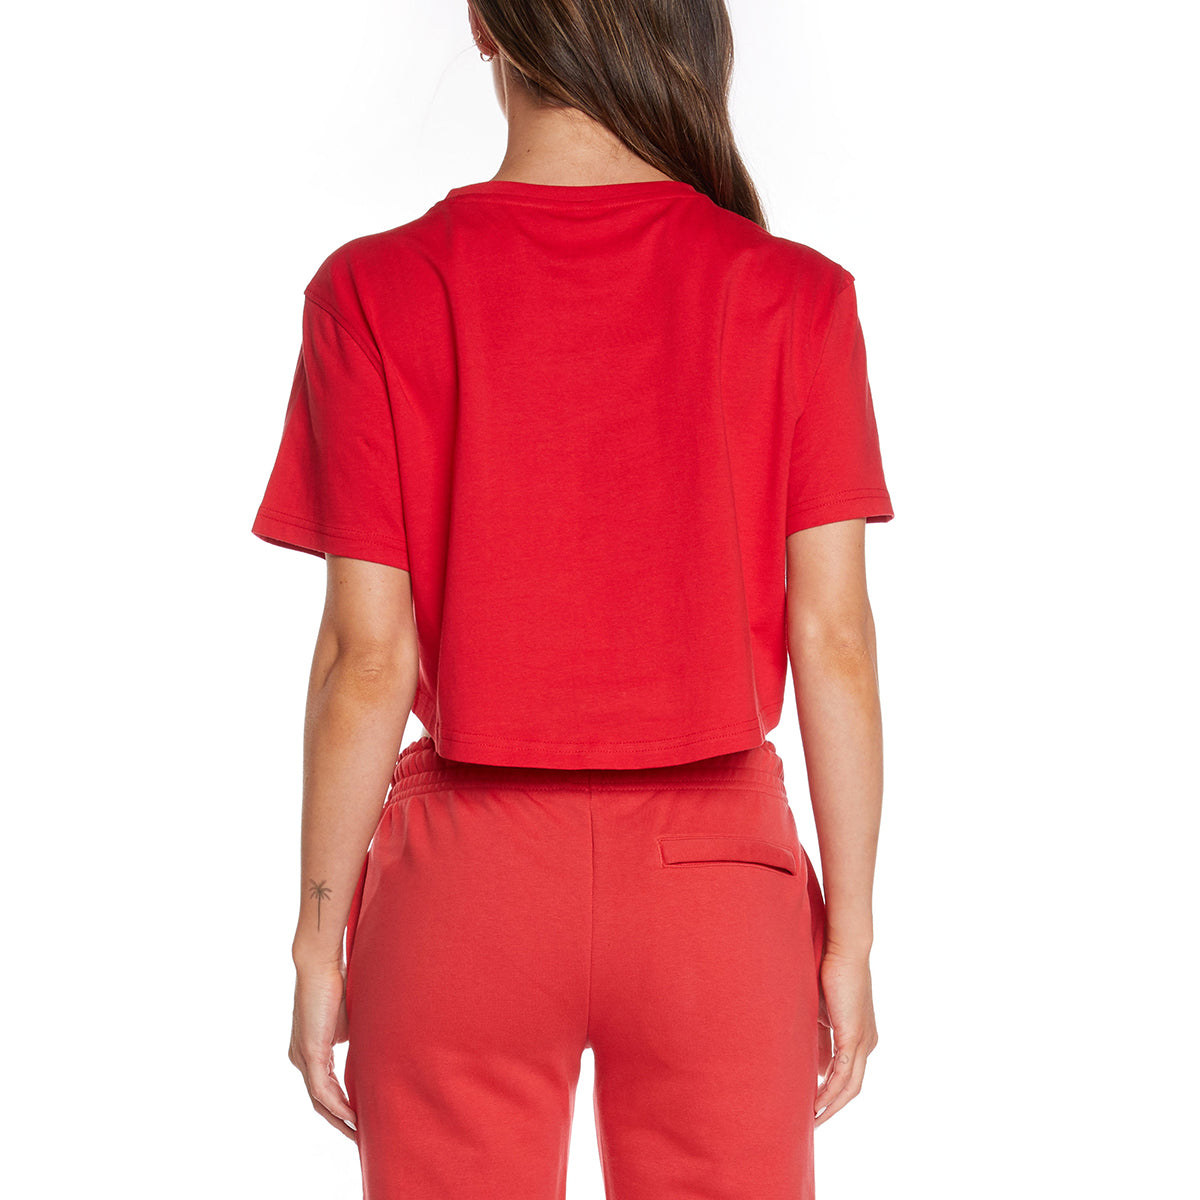 Camiseta Kalisz rojo mujer - imagen 2